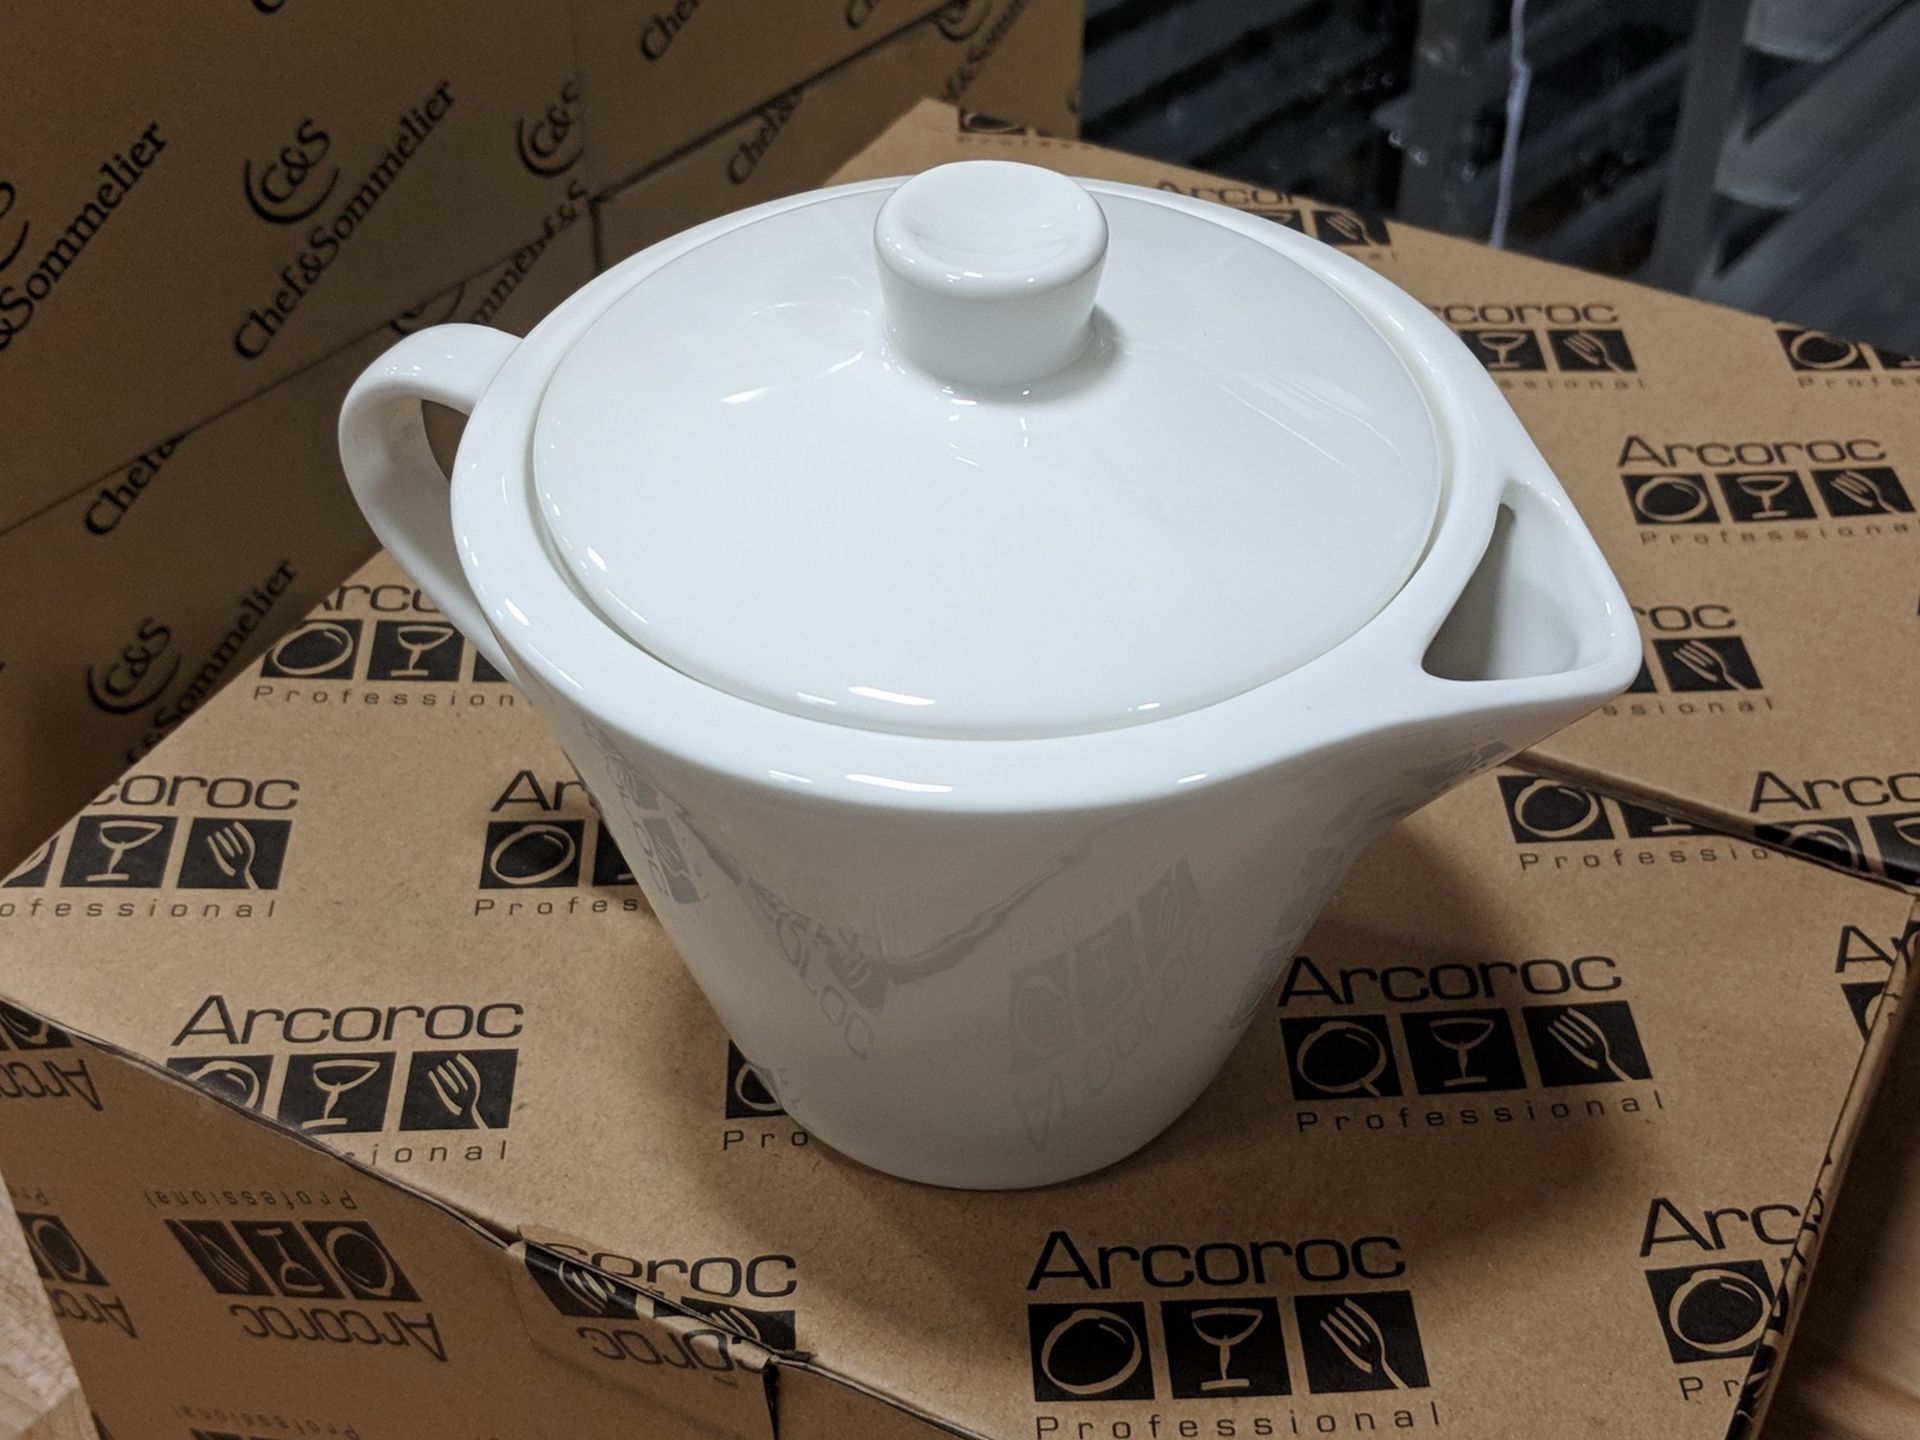 13.5oz/400ml White Porcelain Tea Pots, Arcoroc "Mera" R1119 - Lot of 4